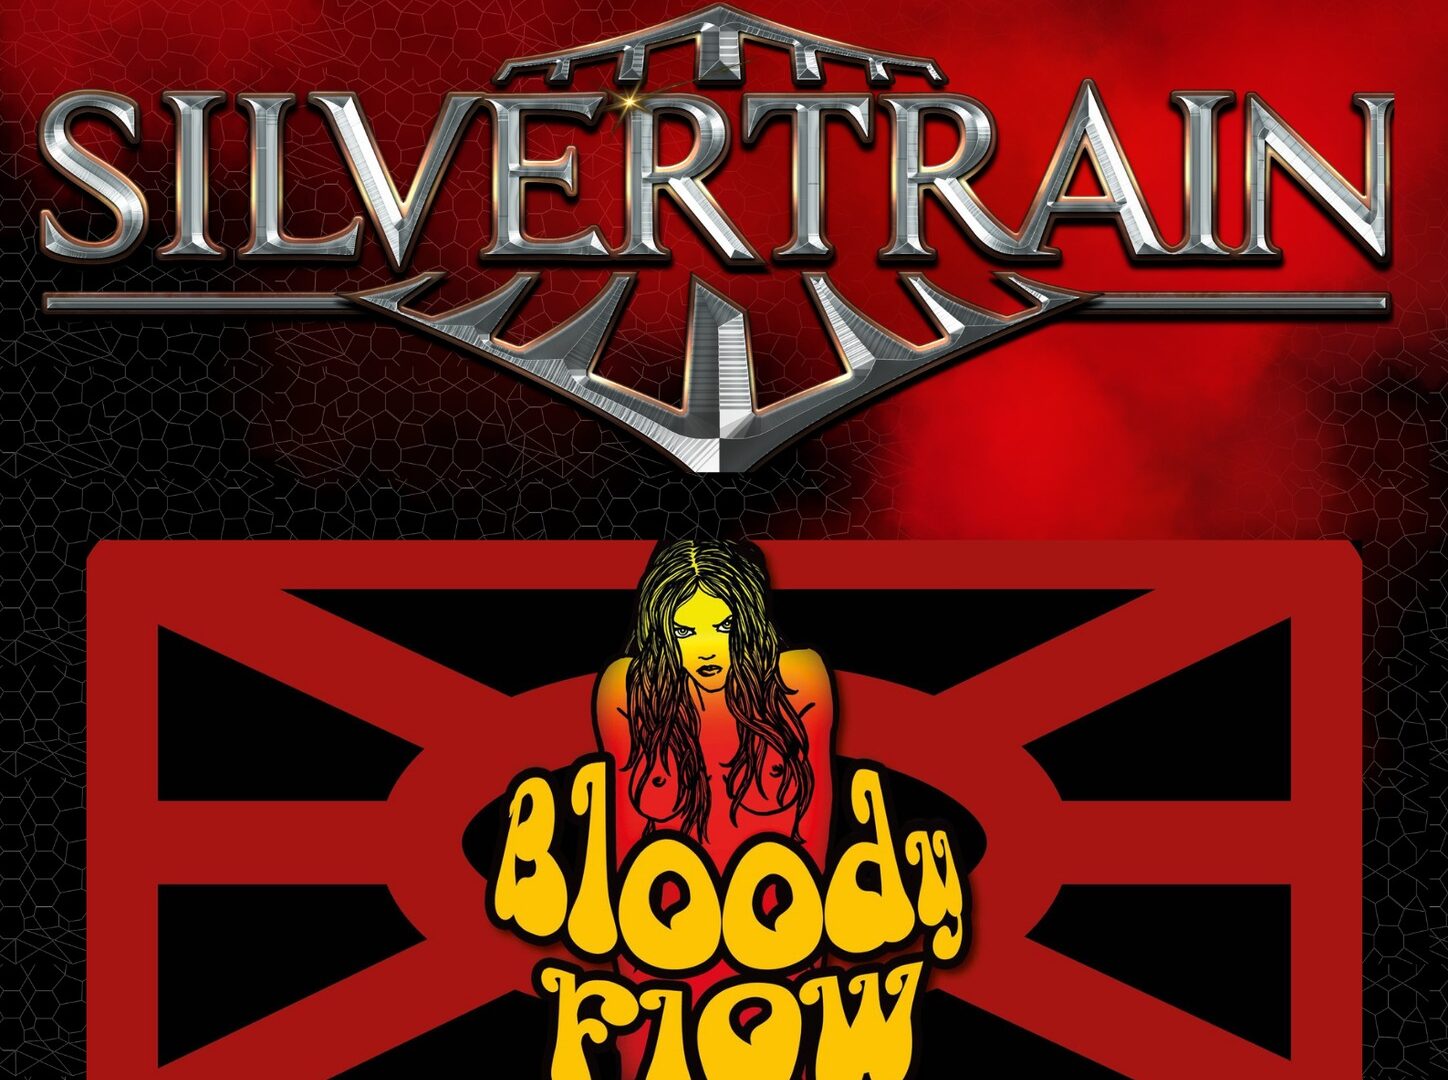 Concert Silvertrain + Bloody Flow